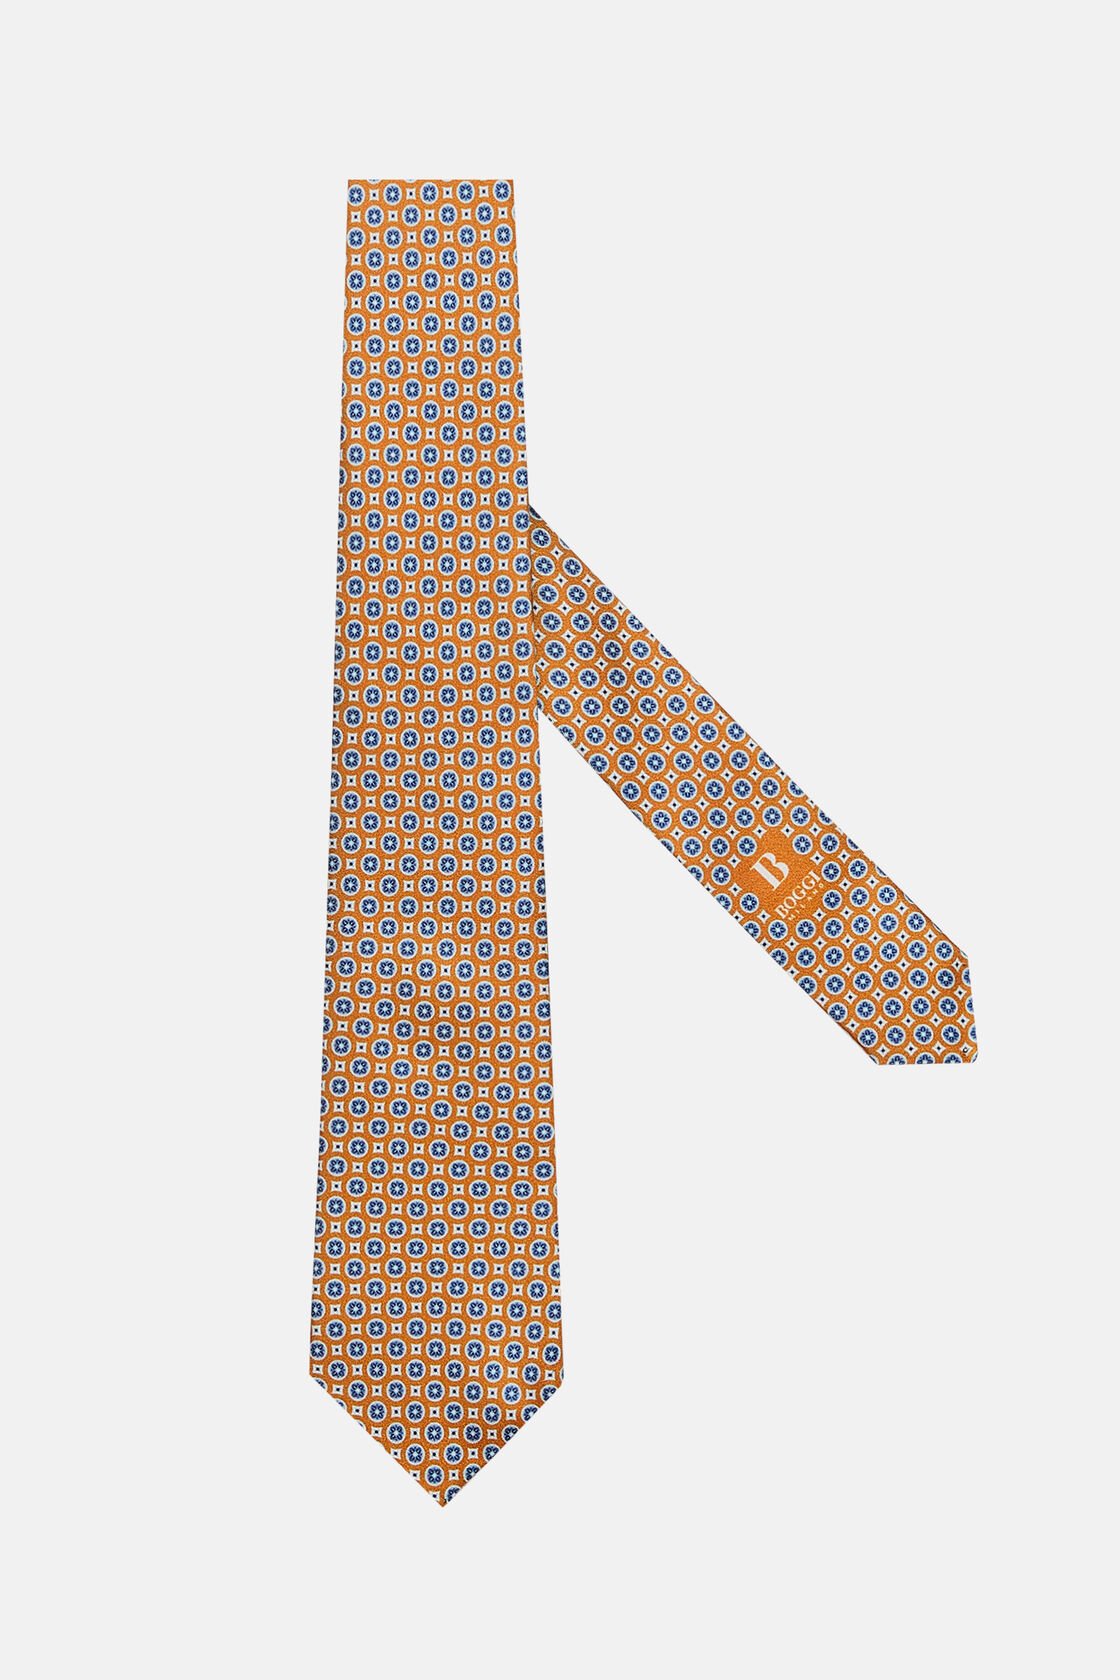 Cravatta Motivo Medaglioni In Seta, Arancione, hi-res